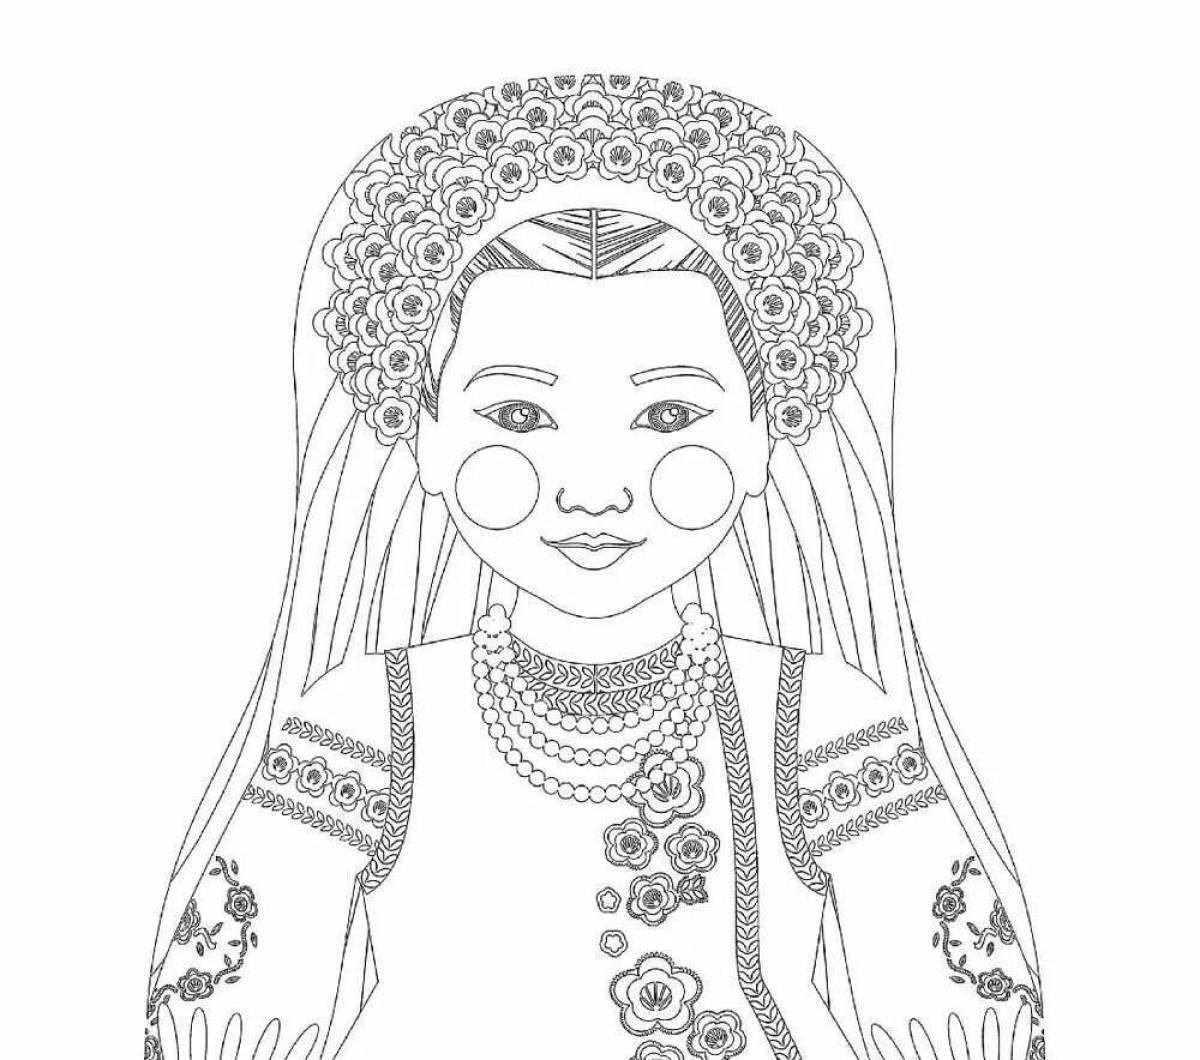 Charming coloring girl in kokoshnik